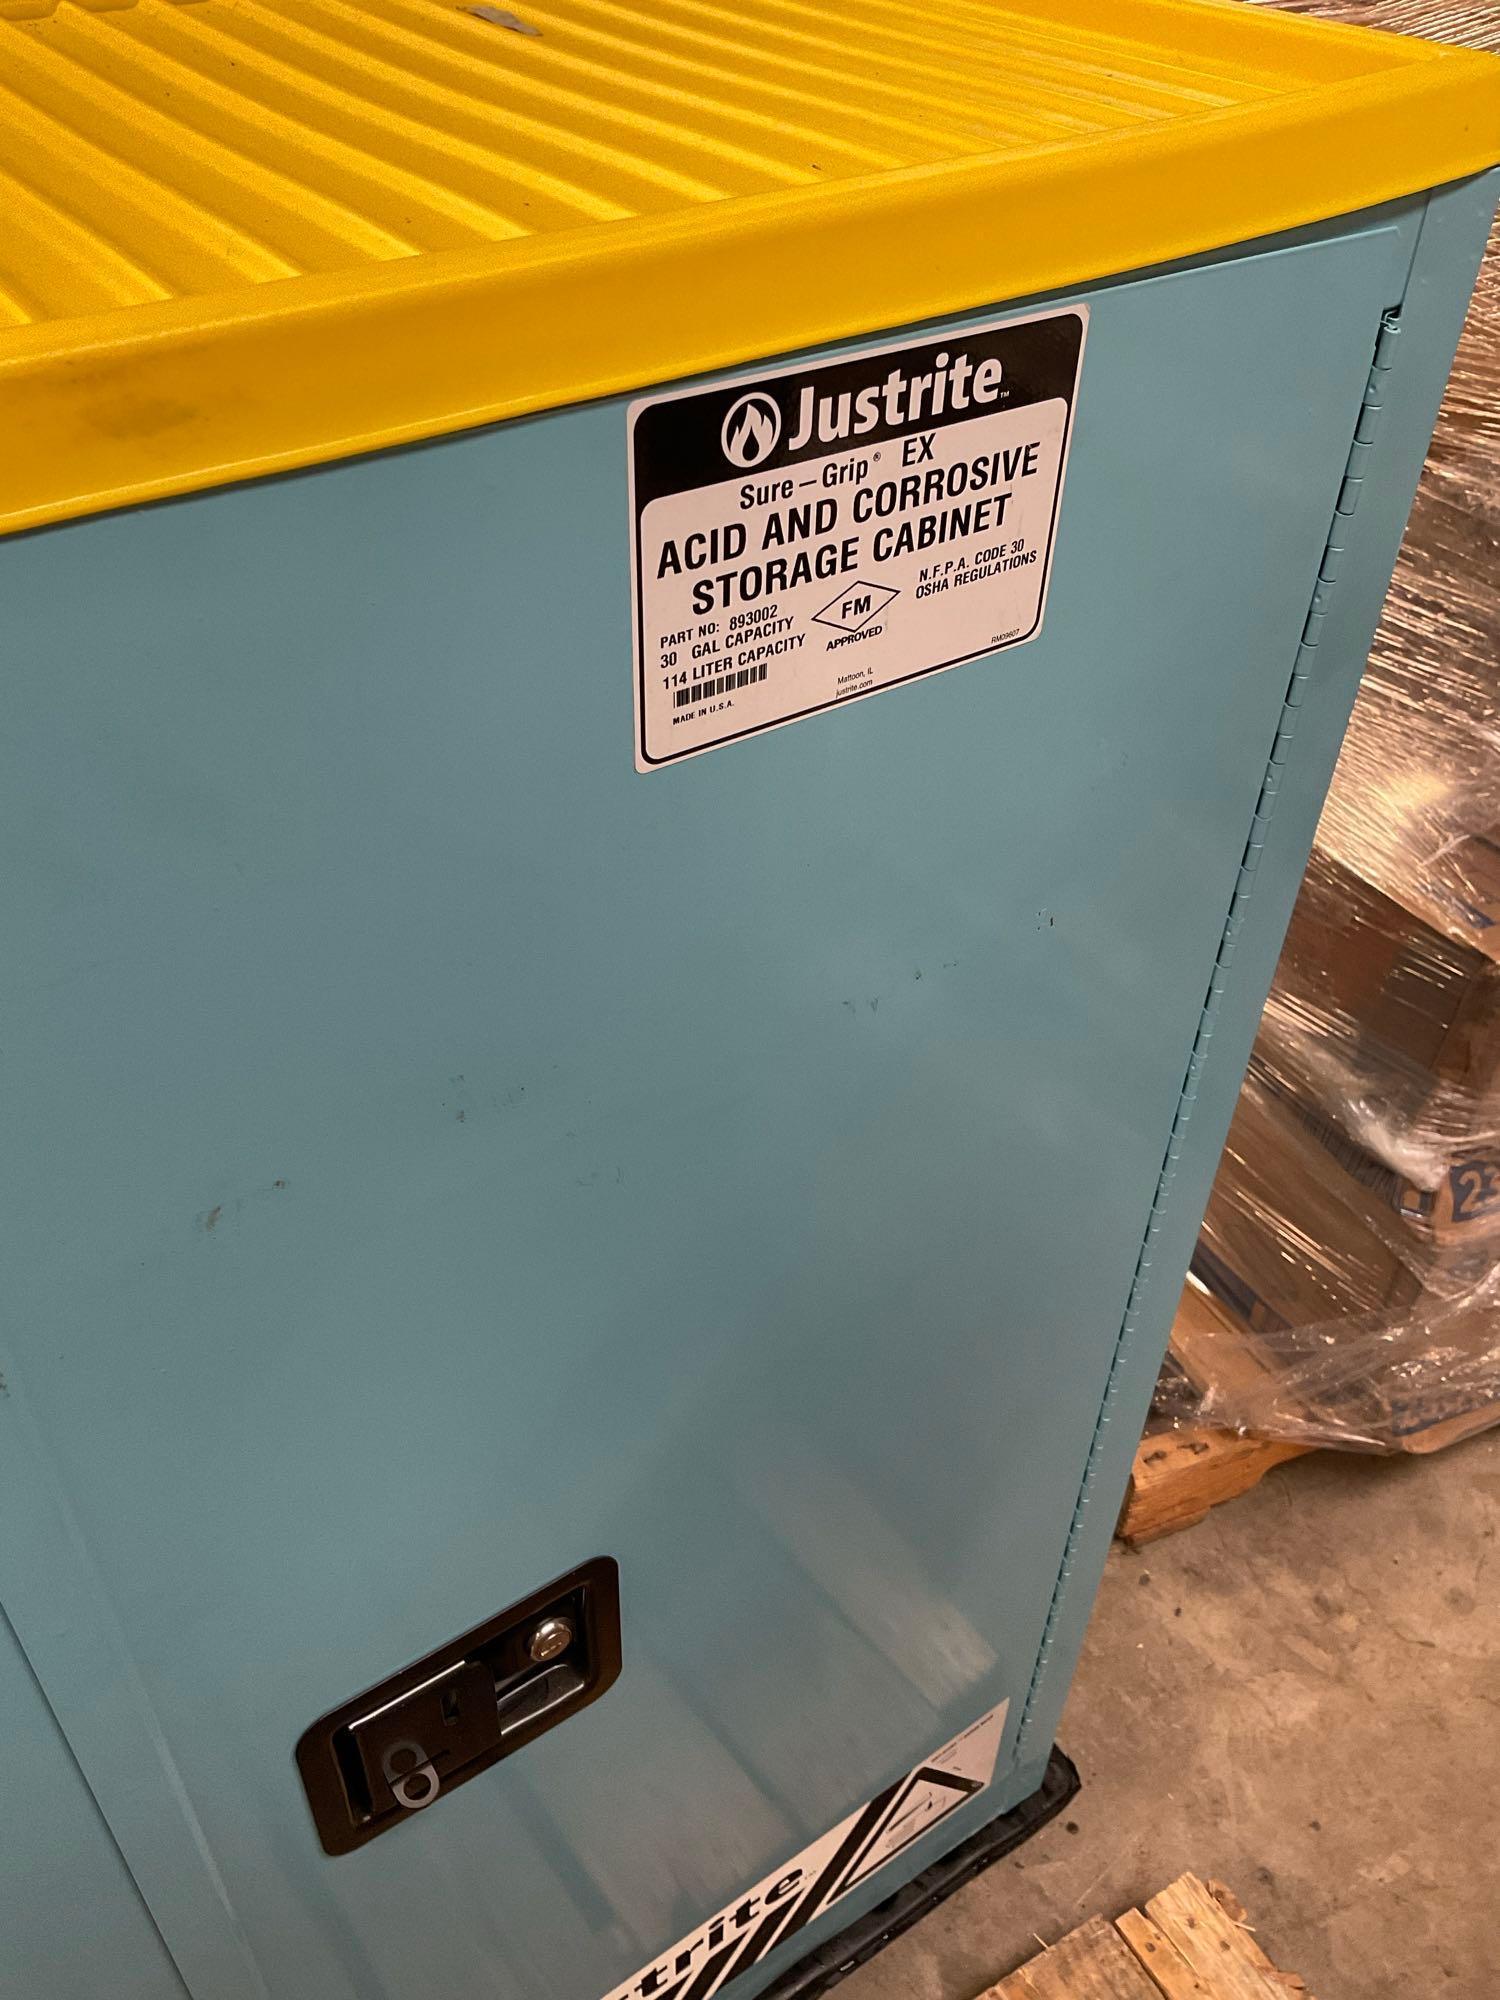 Justrite Sure Grip EX acid and corrosive storage cabinet. 44" L x 43" W x 18" D